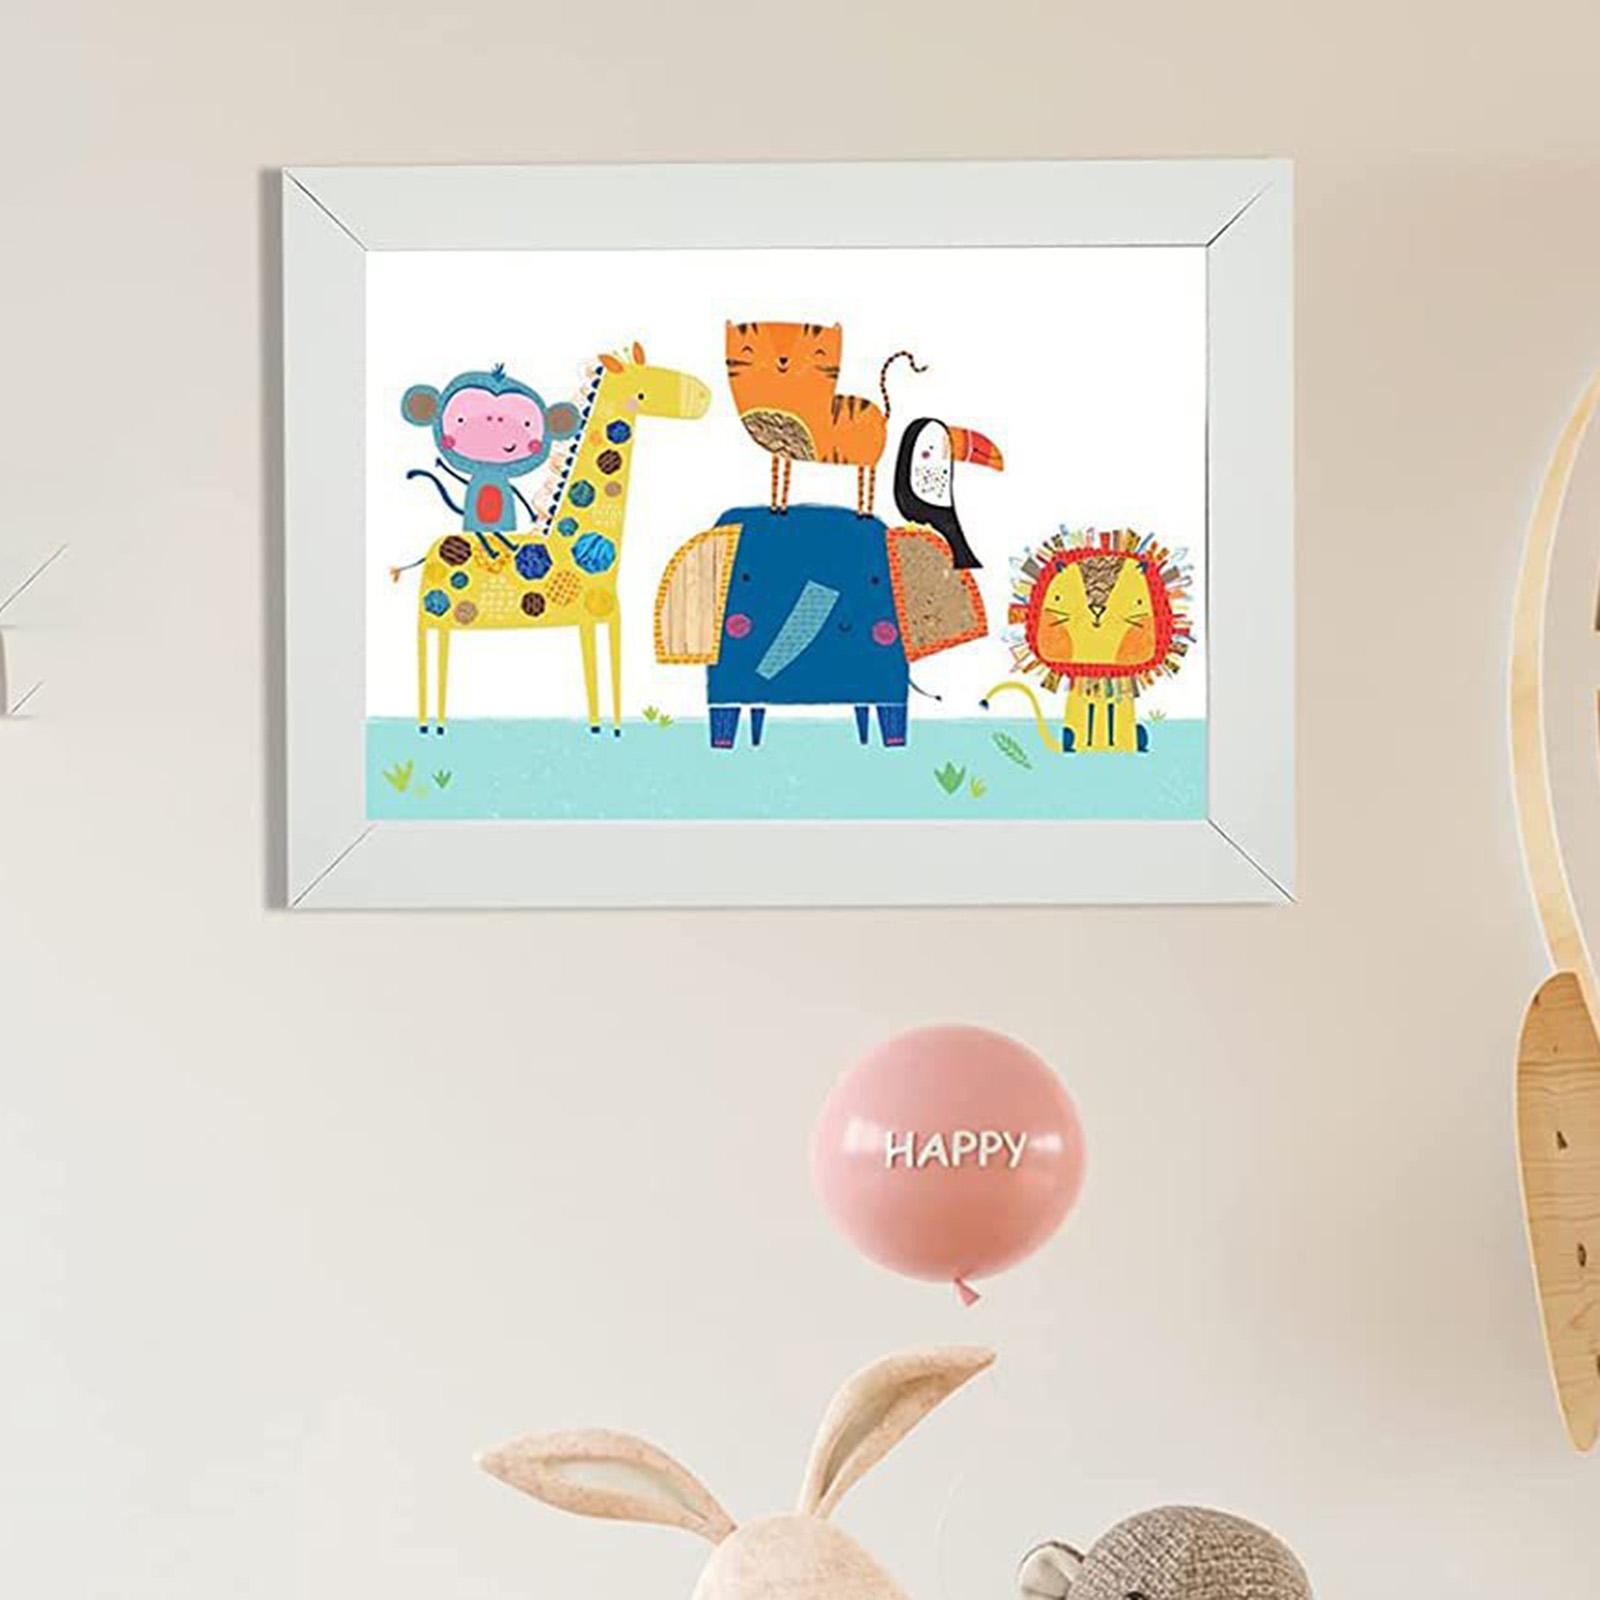 Kids Artwork Frames Changeable for Award Certificate Drawings Home Decor